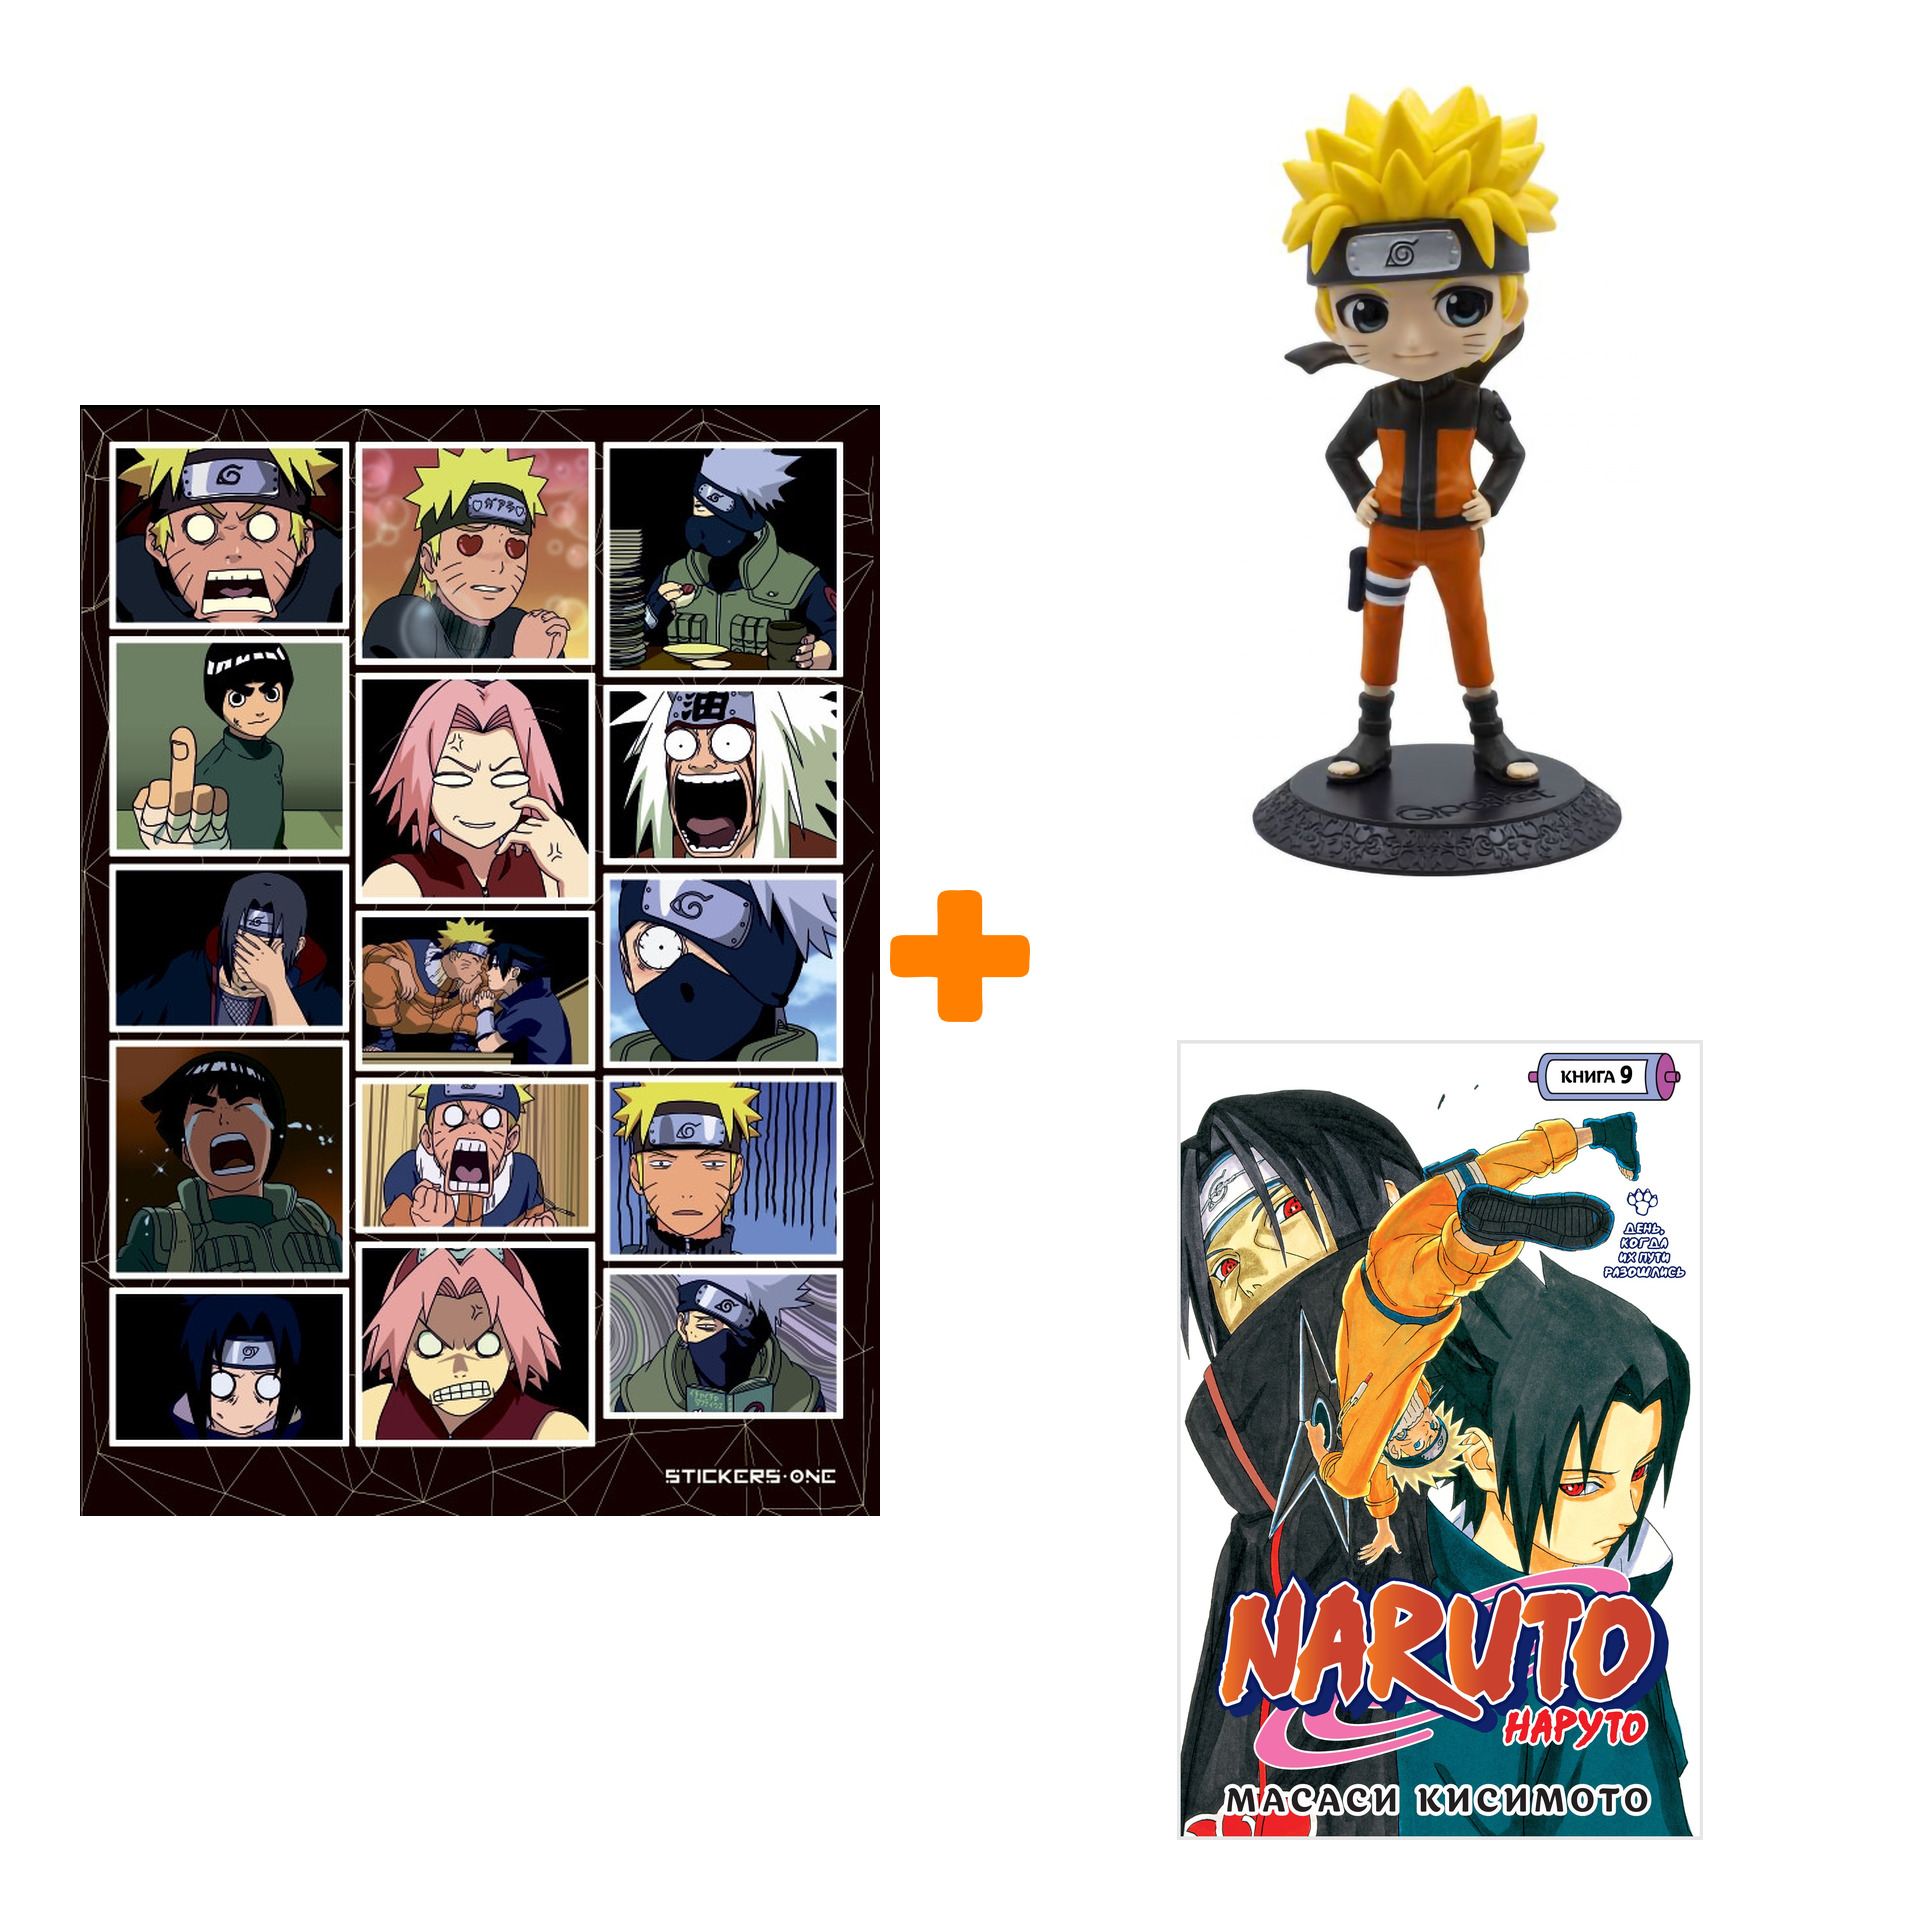 Набор Naruto Shippuden фигурка Naruto Uzumaki + манга Naruto 9 День, когда их пути разошлись + стикерпак